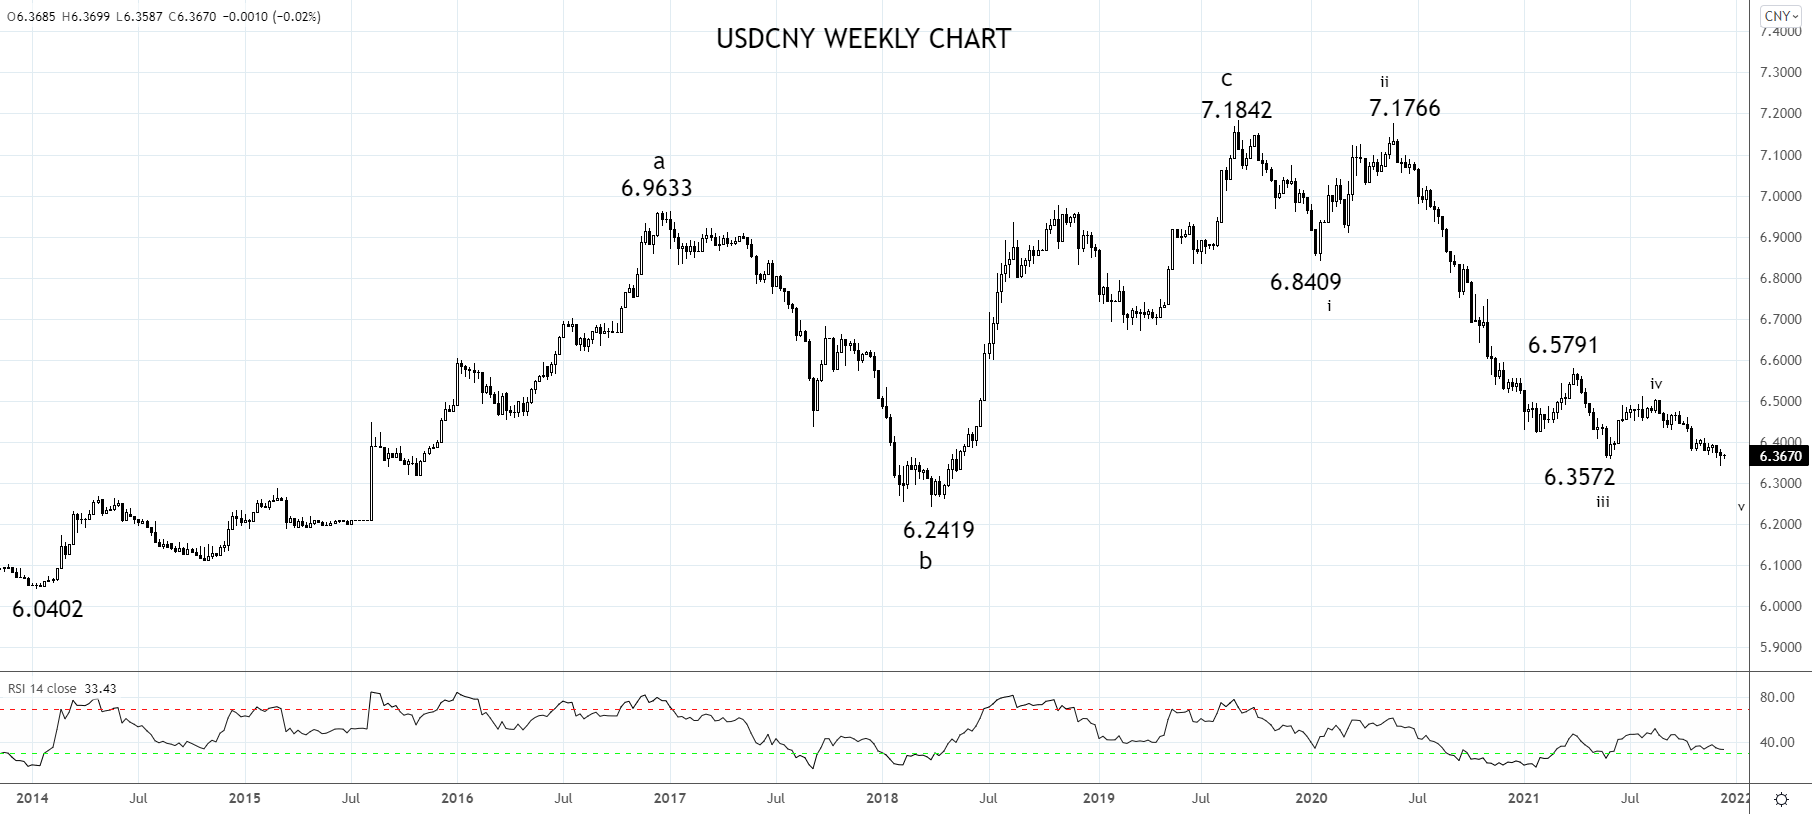 USDCNY Weekly